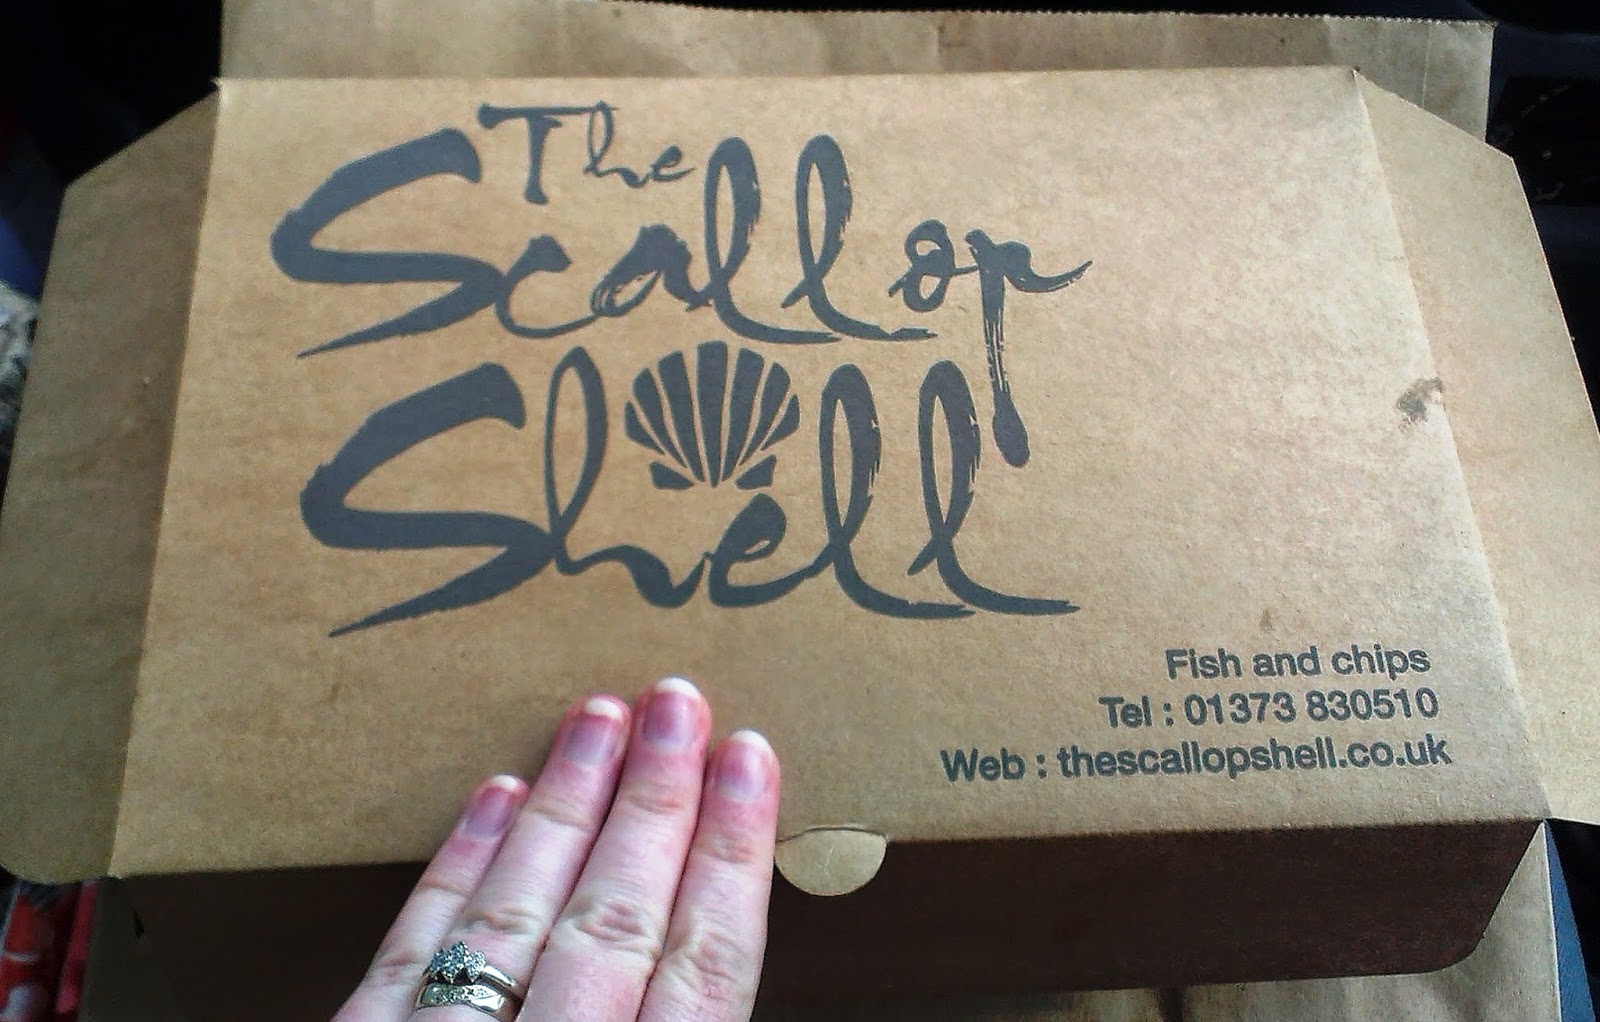 The Scallop Shell chip shop box